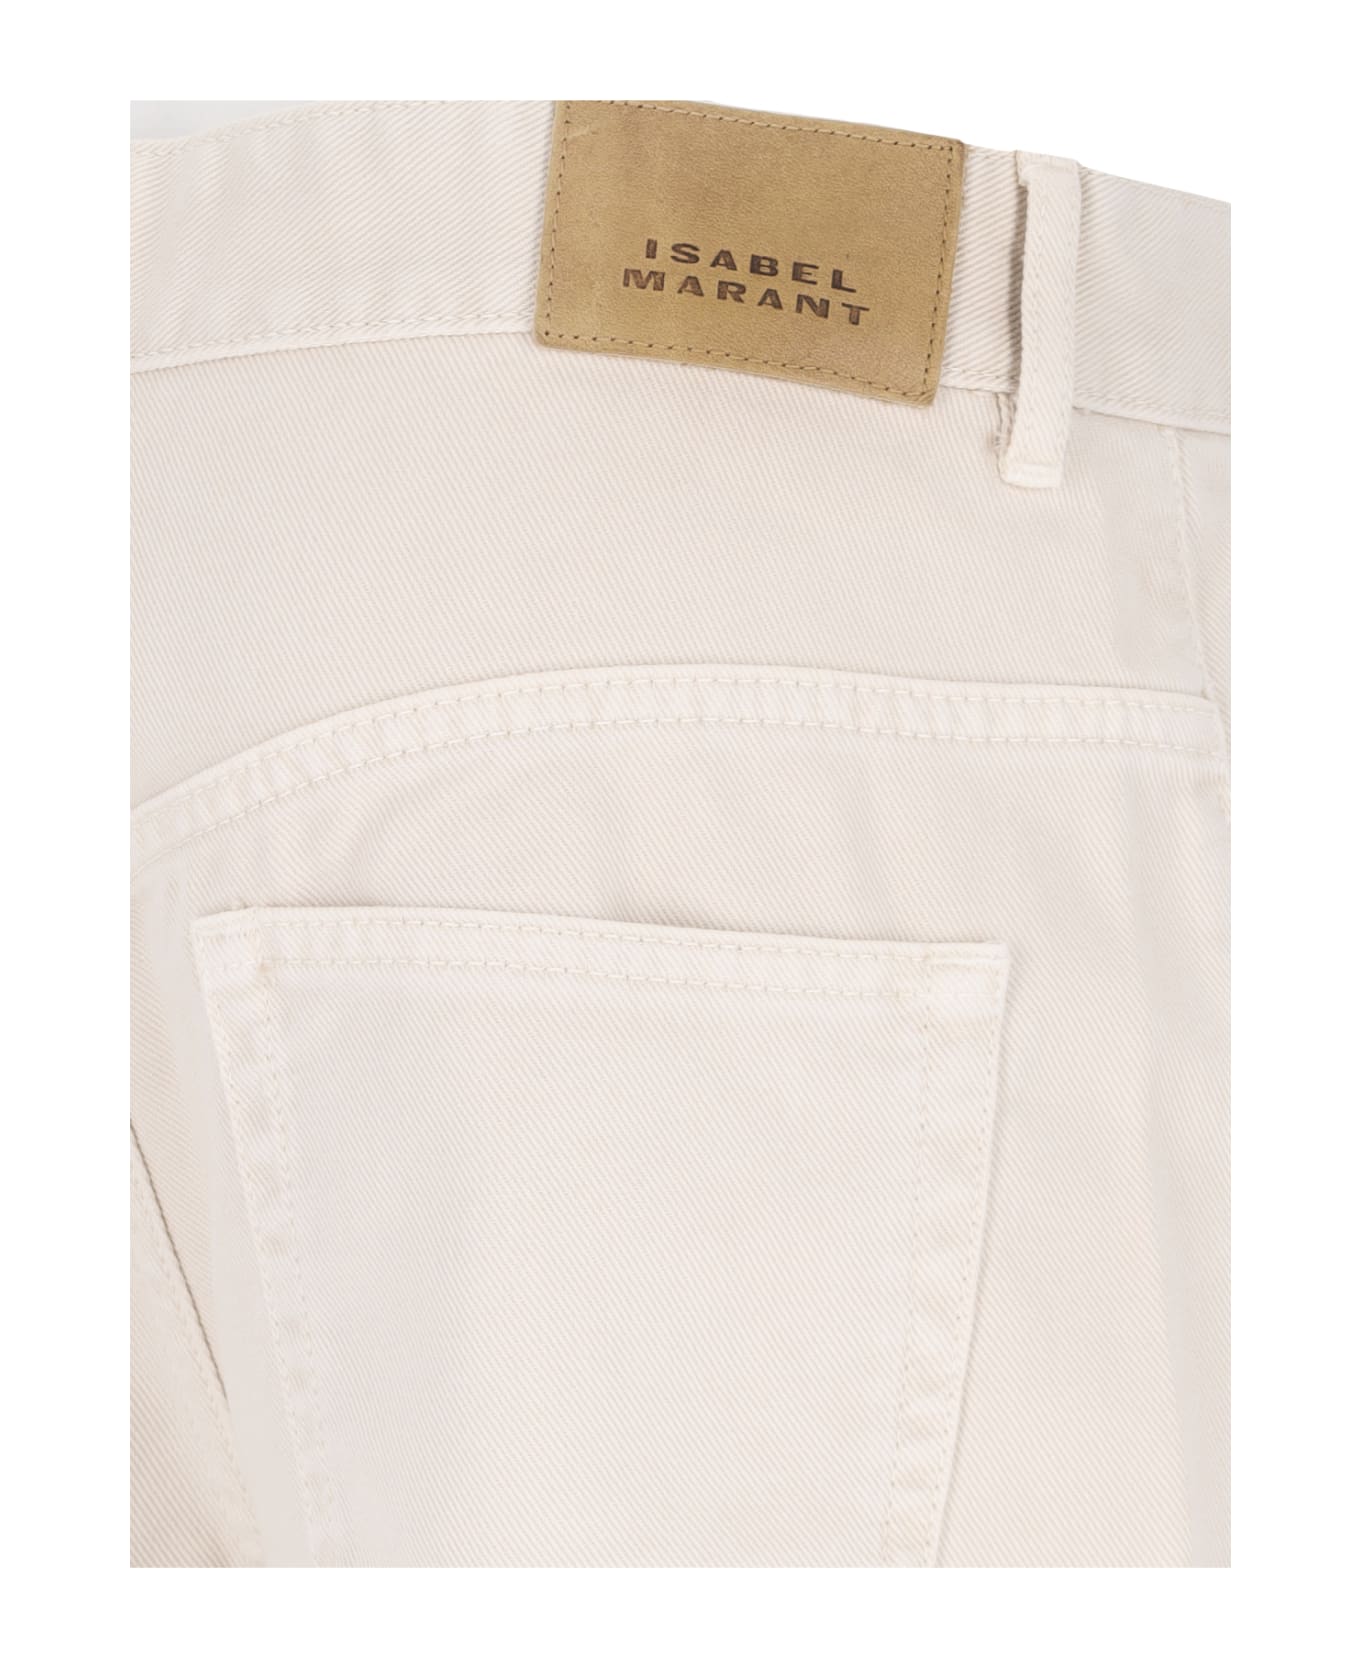 Isabel Marant Jeans - Cream